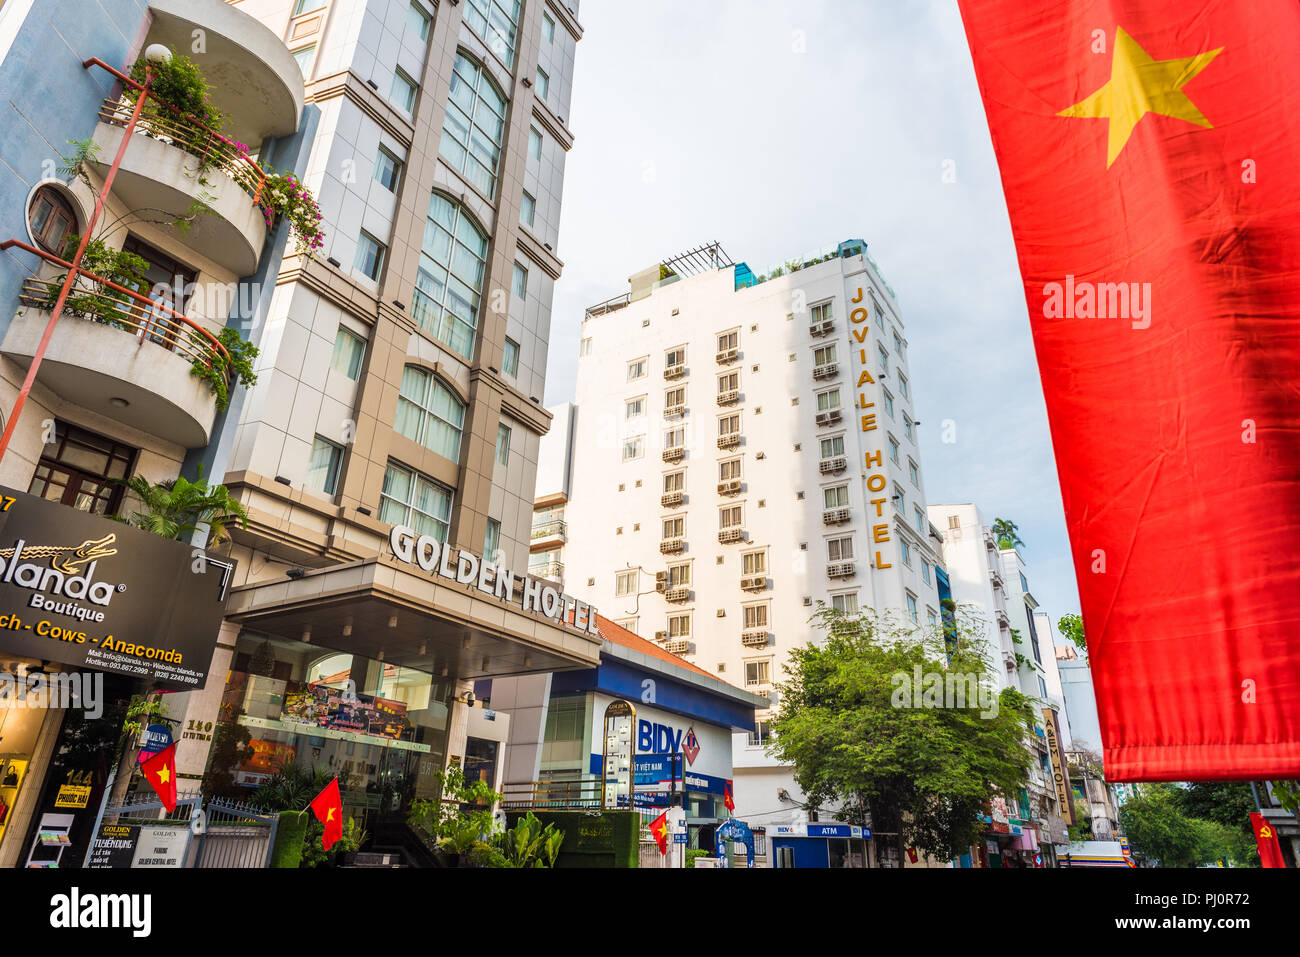 Ho Chi Minh City, Vietnam - am 29. April 2018: Das 4-Sterne Golden Central Hotel Saigon, Joviale Hotel & die Flagge von Vietnam in Ly Tu Trong Street, District 1. Stockfoto